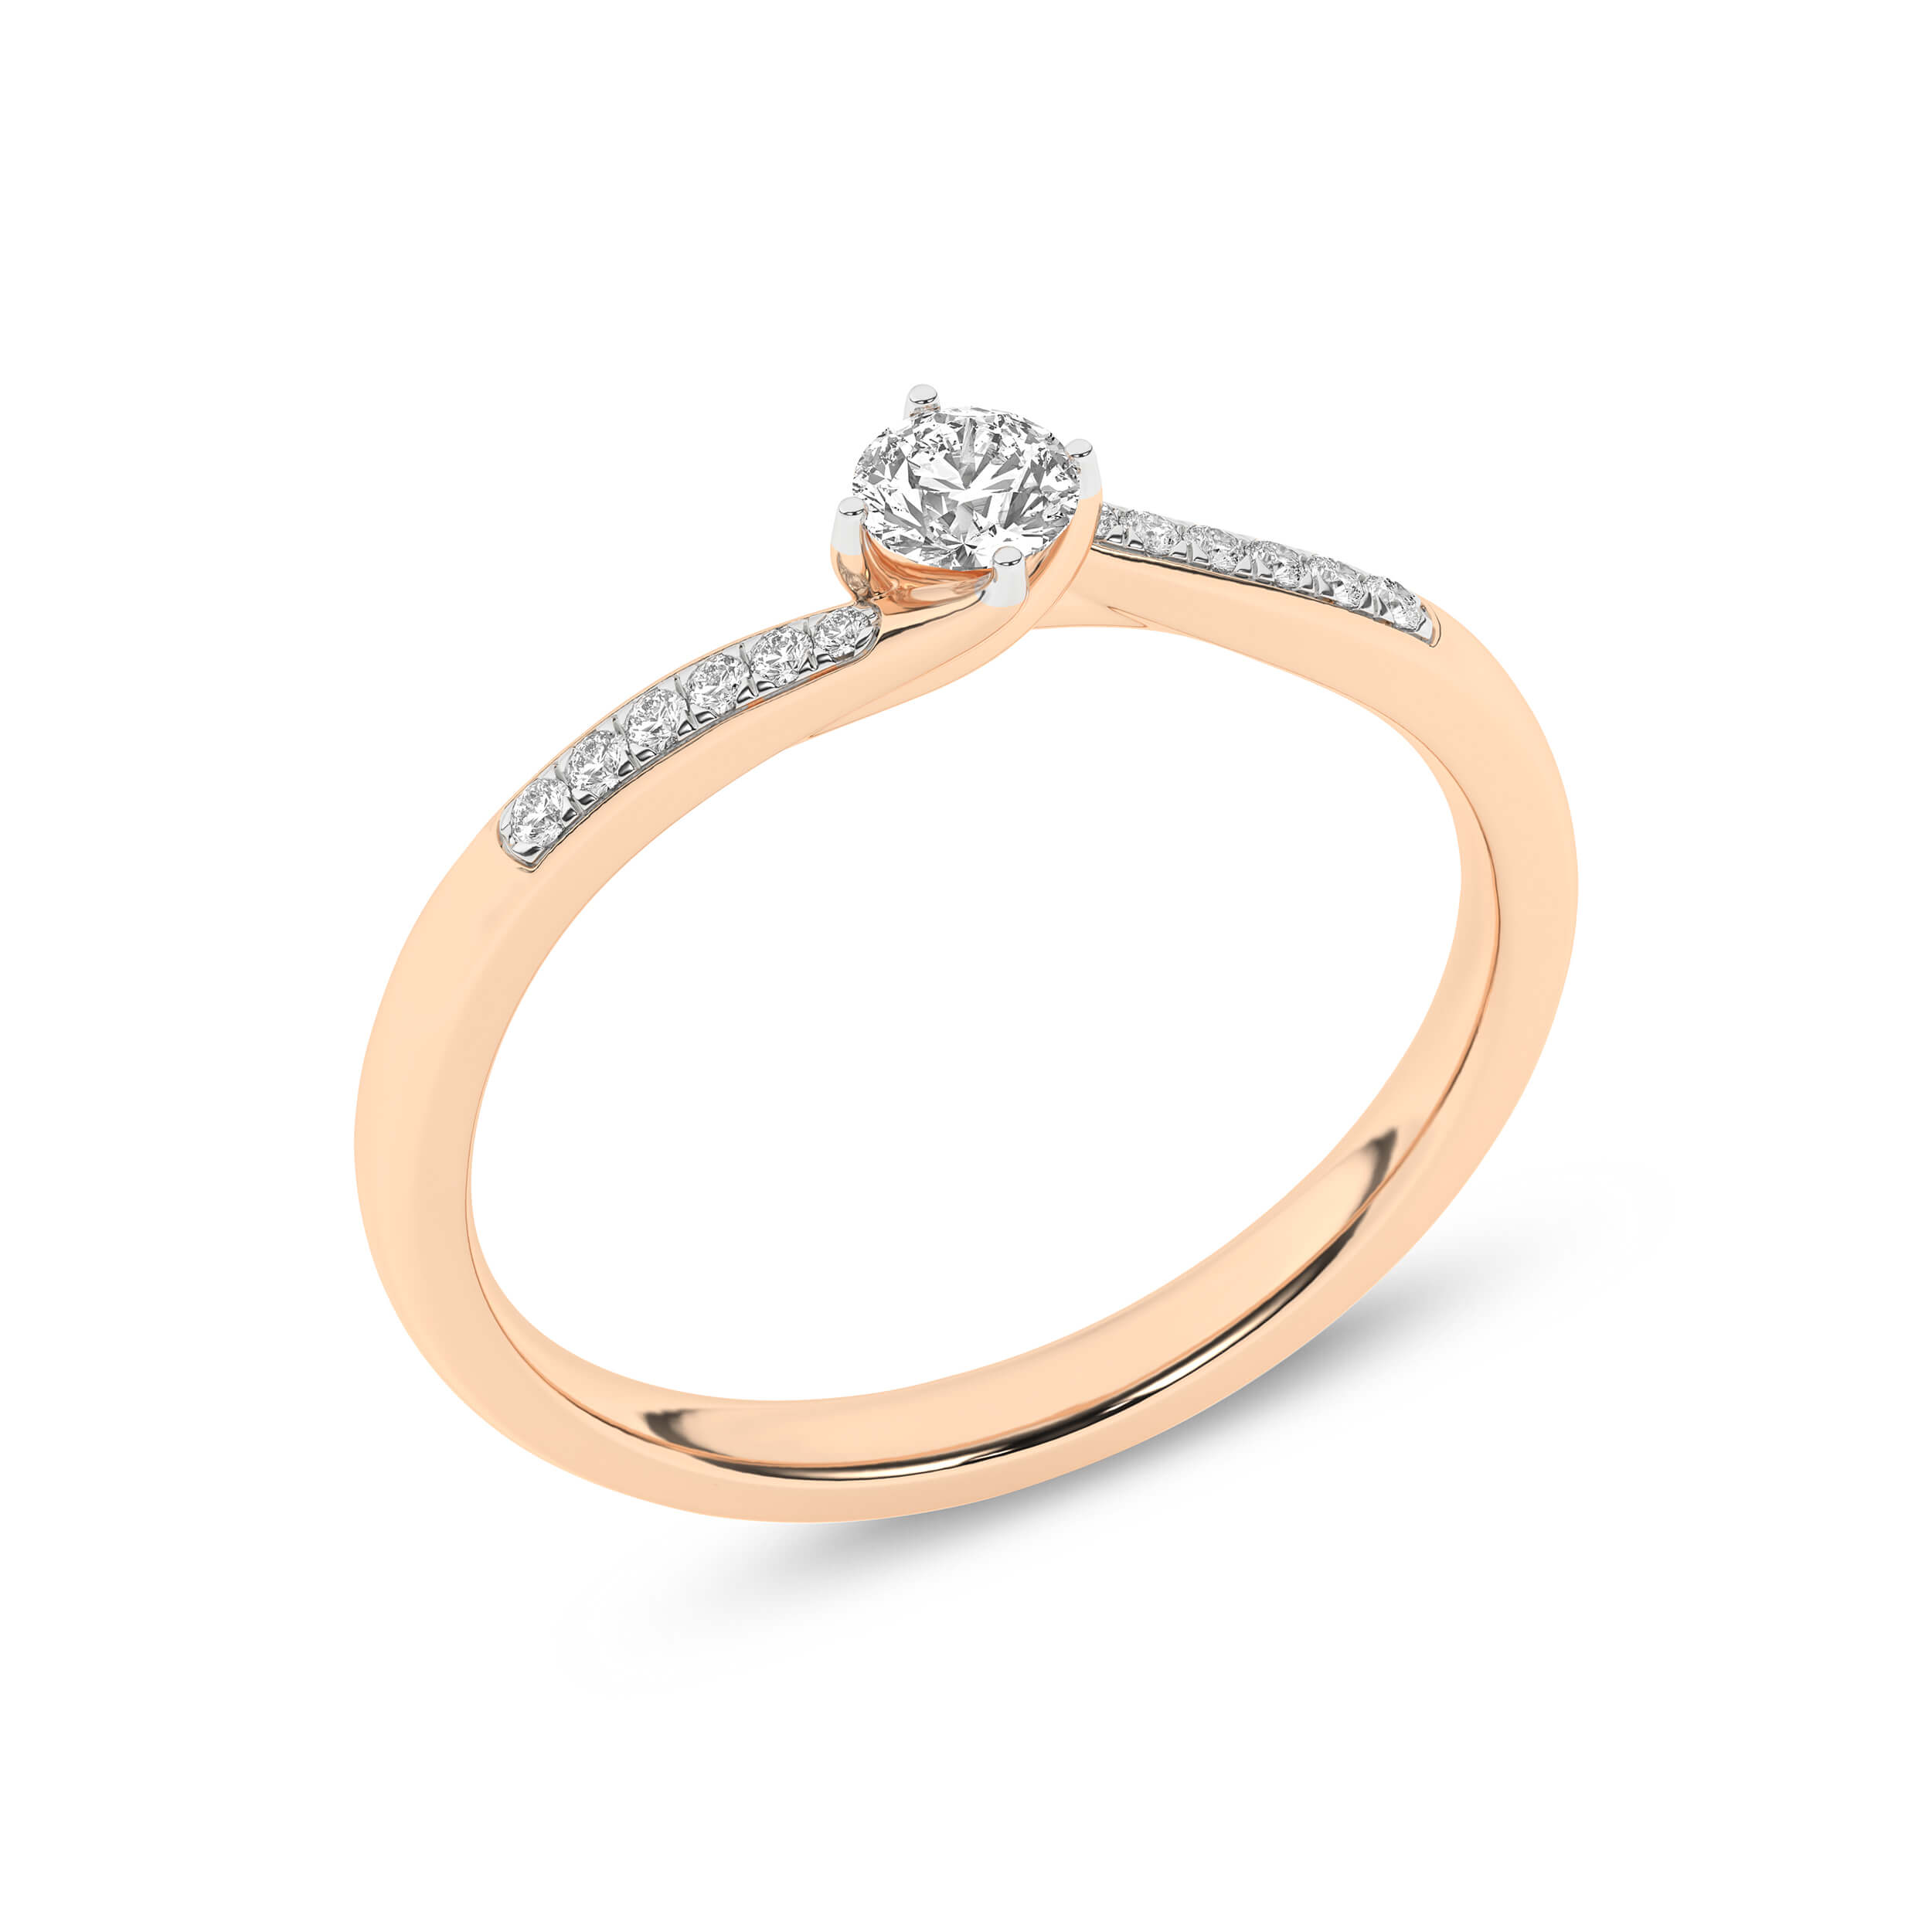 Inel de logodna din Aur Roz 14K cu Diamante 0.18Ct, articol RB16847EG, previzualizare foto 4